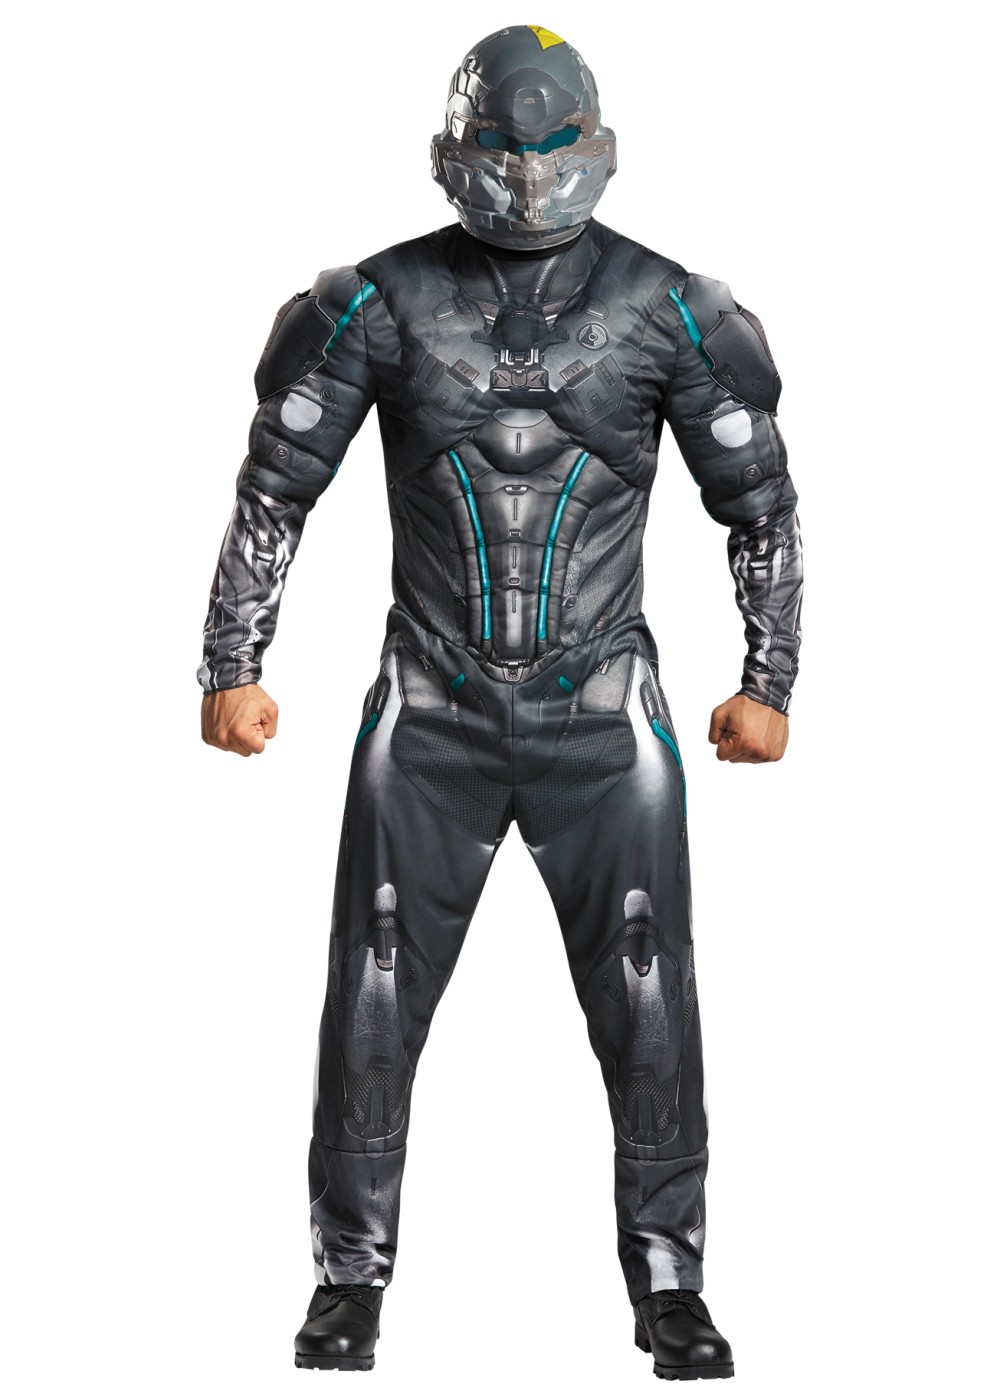 Halo Spartan Locke Muscle Costume